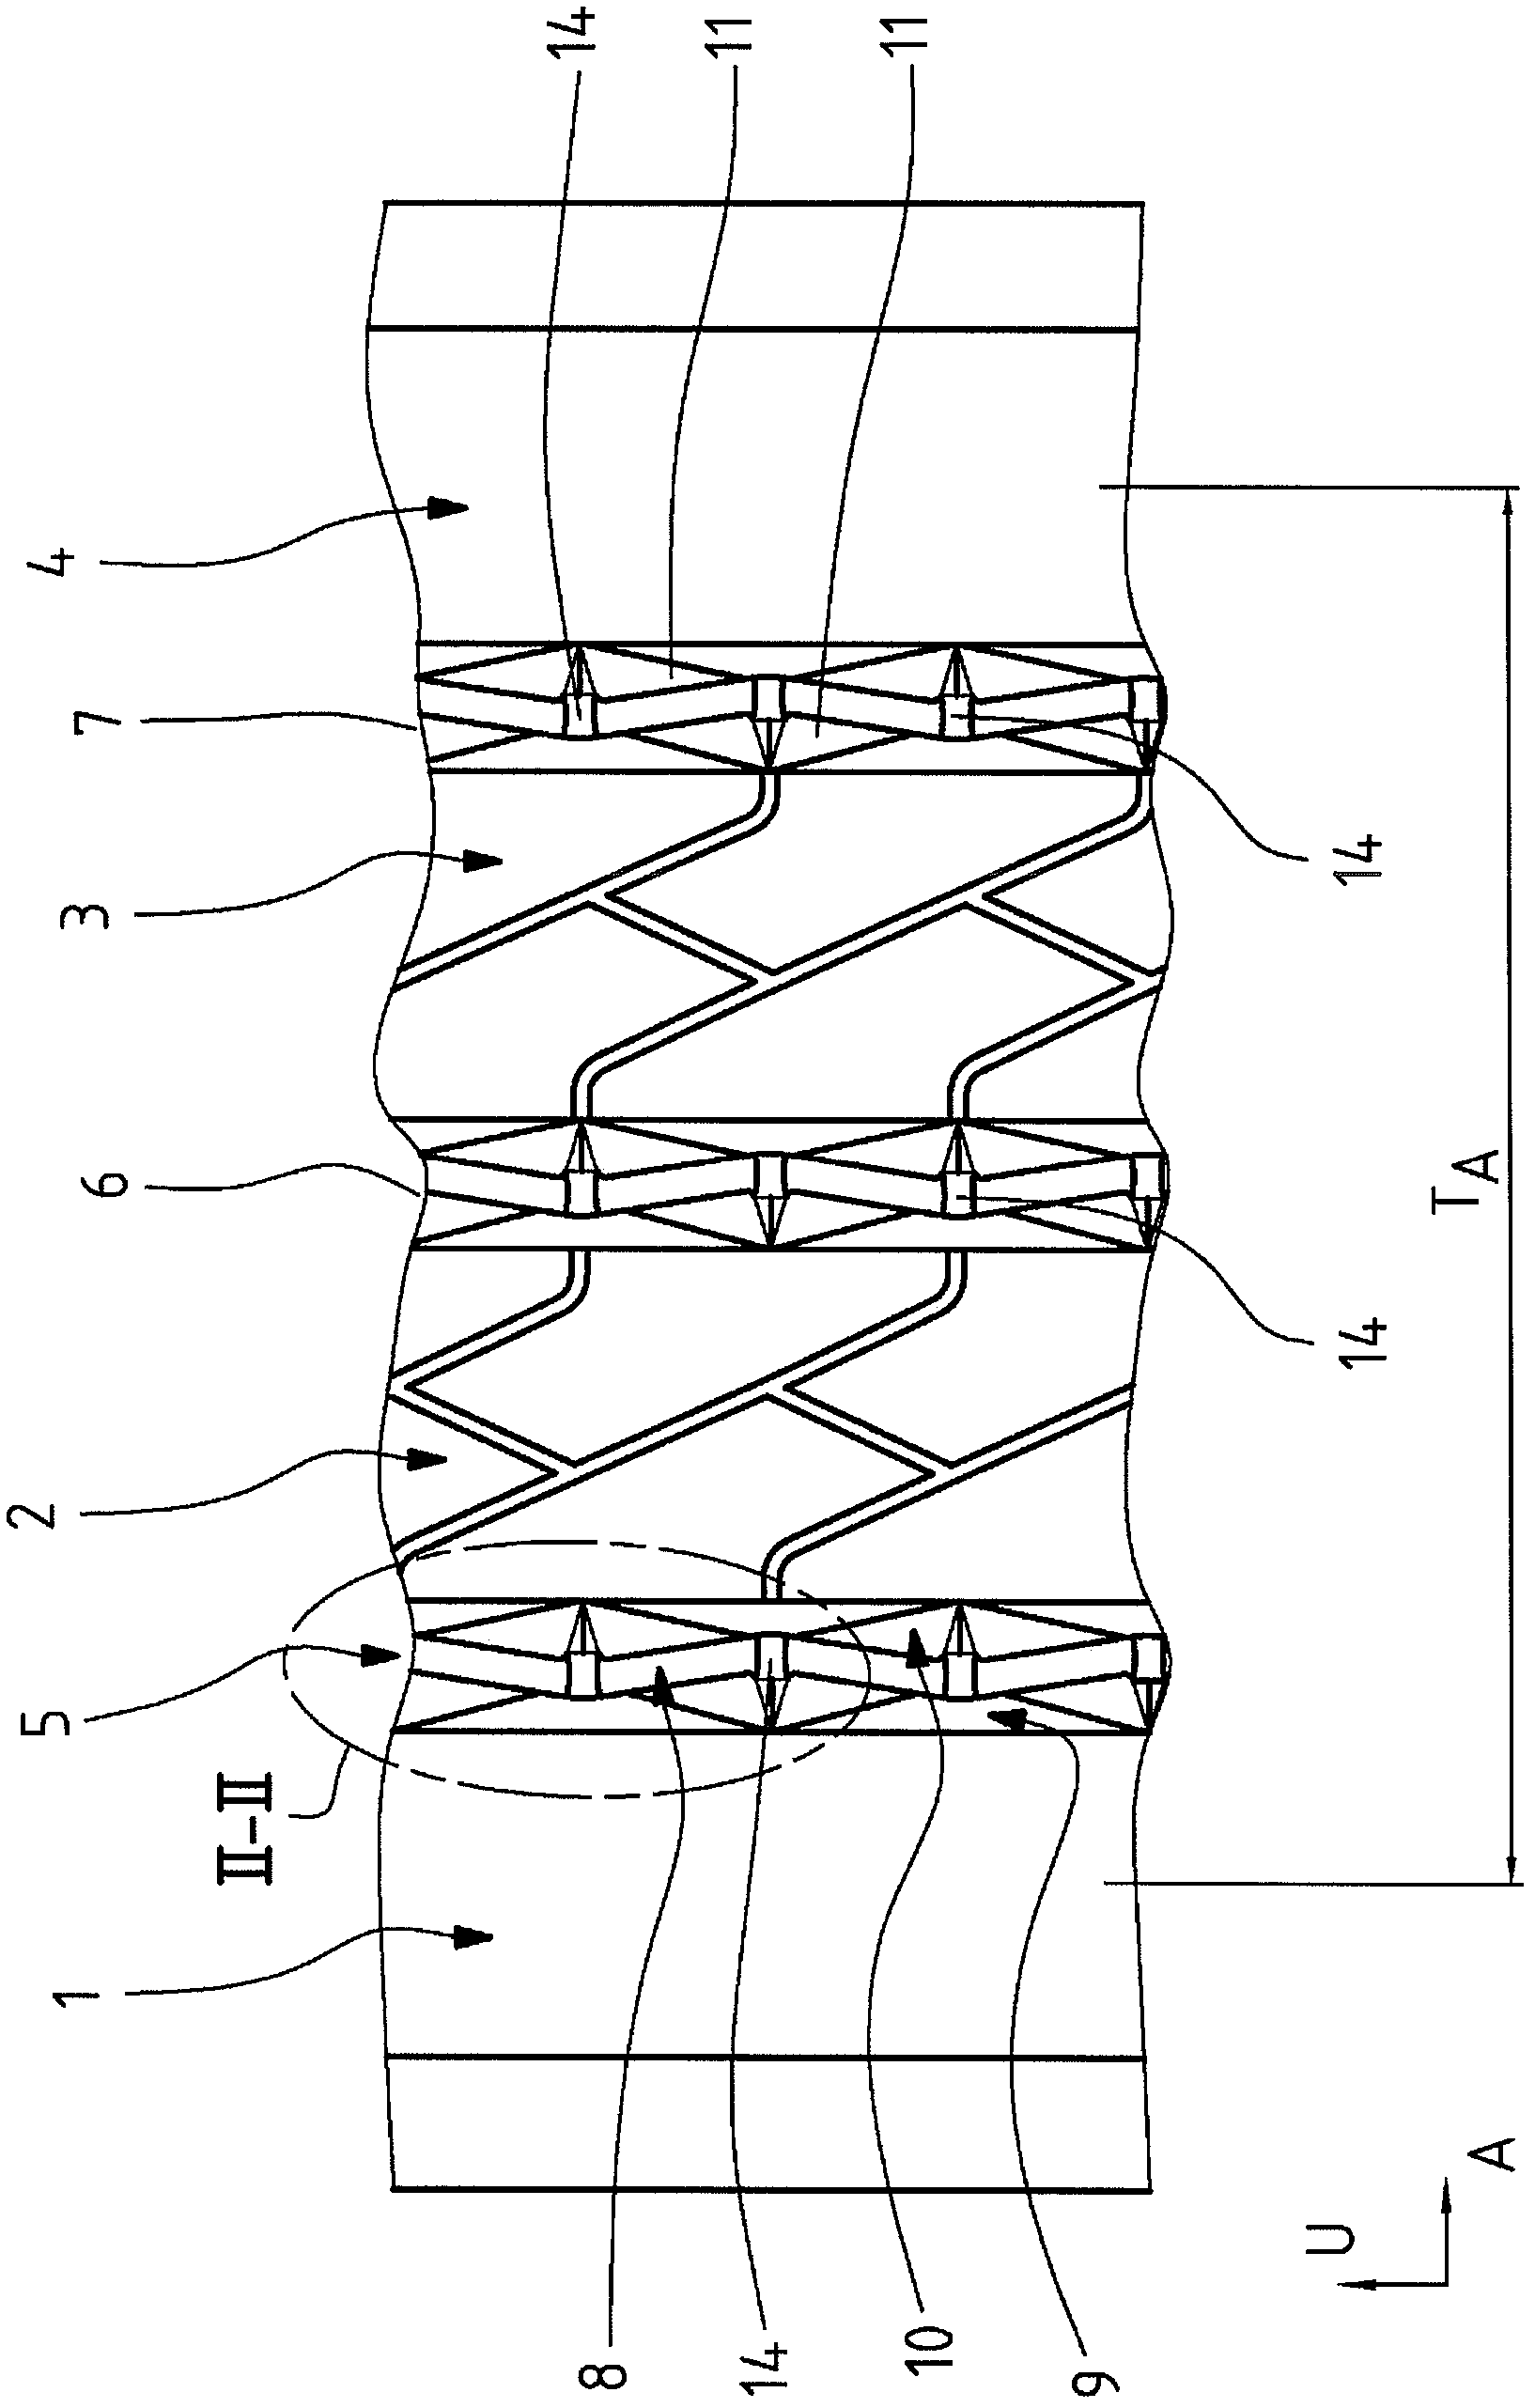 Tread profile of a vehicle tire